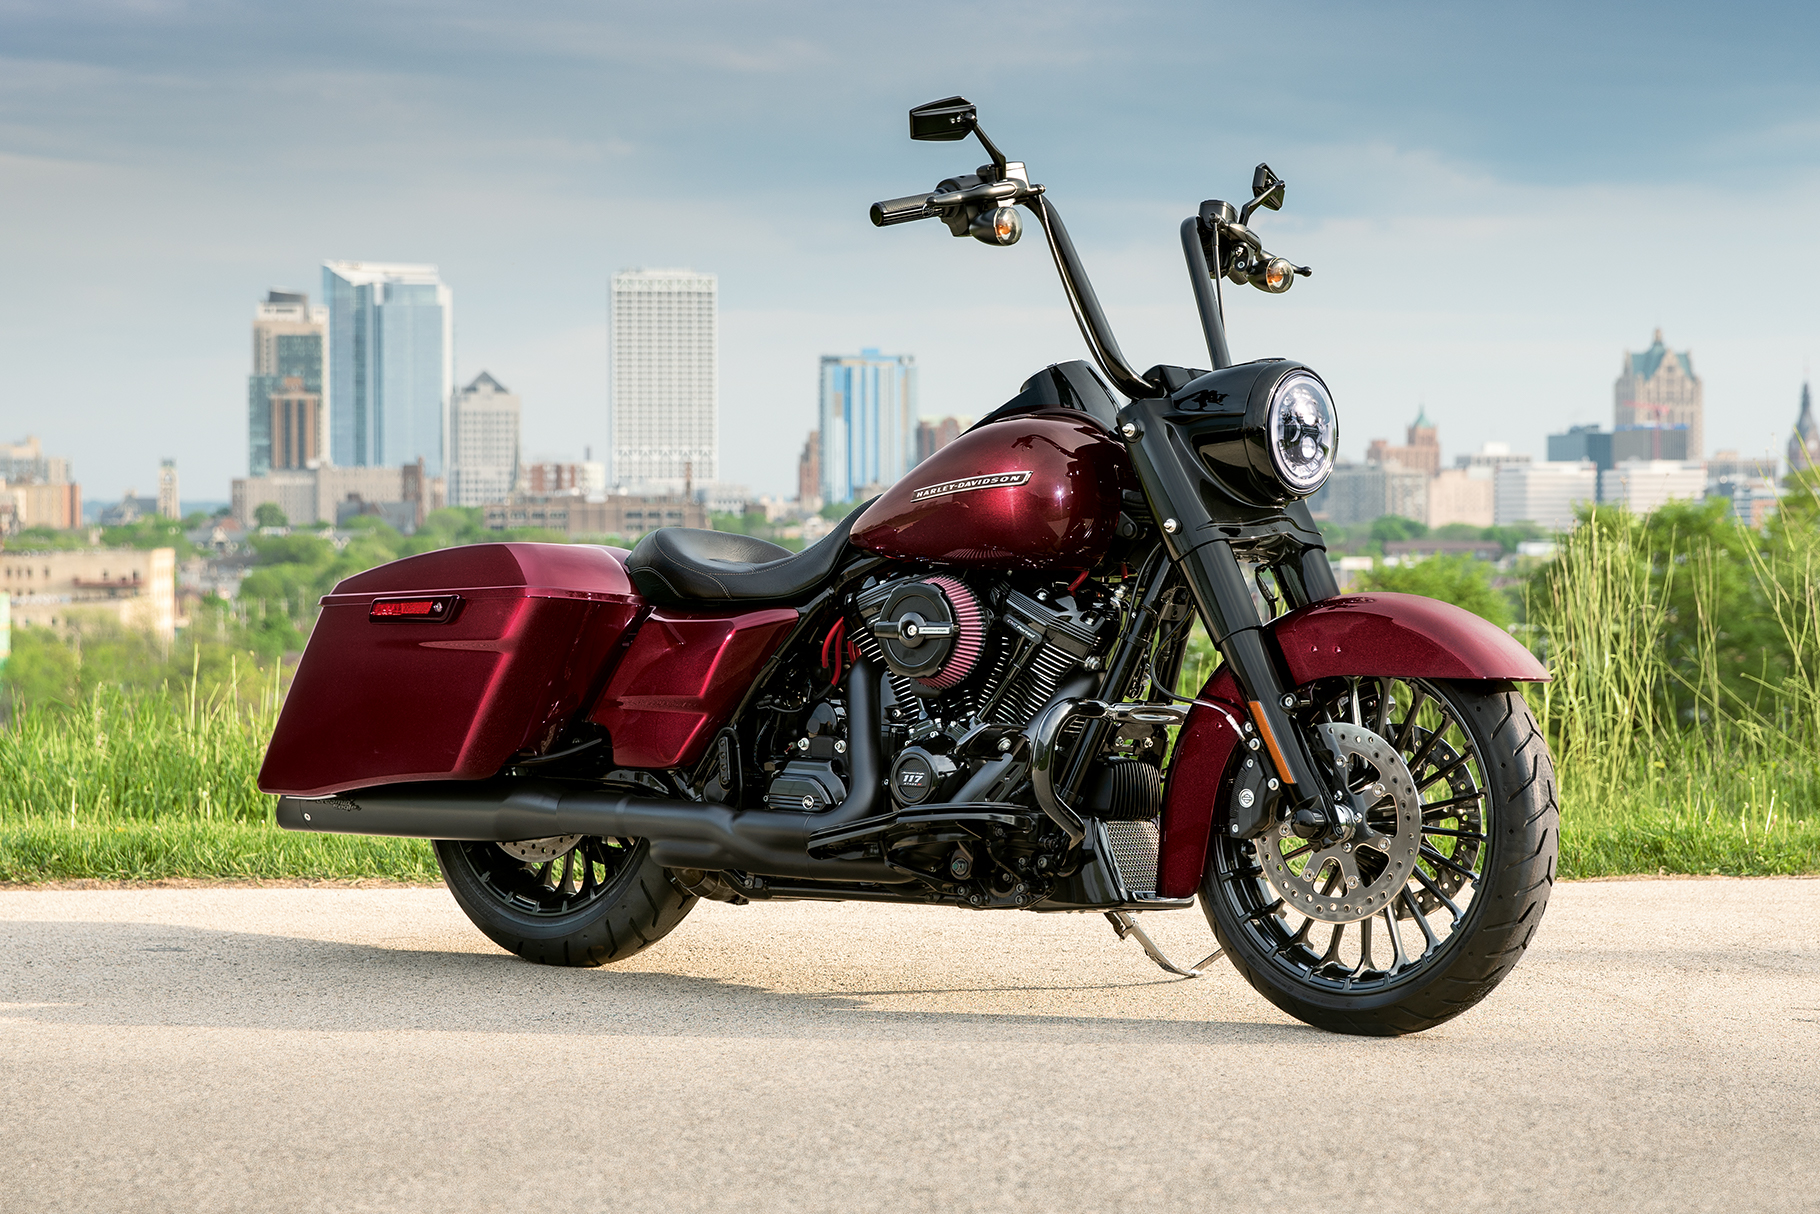  2019 Road King Special Motorcycle Harley Davidson USA